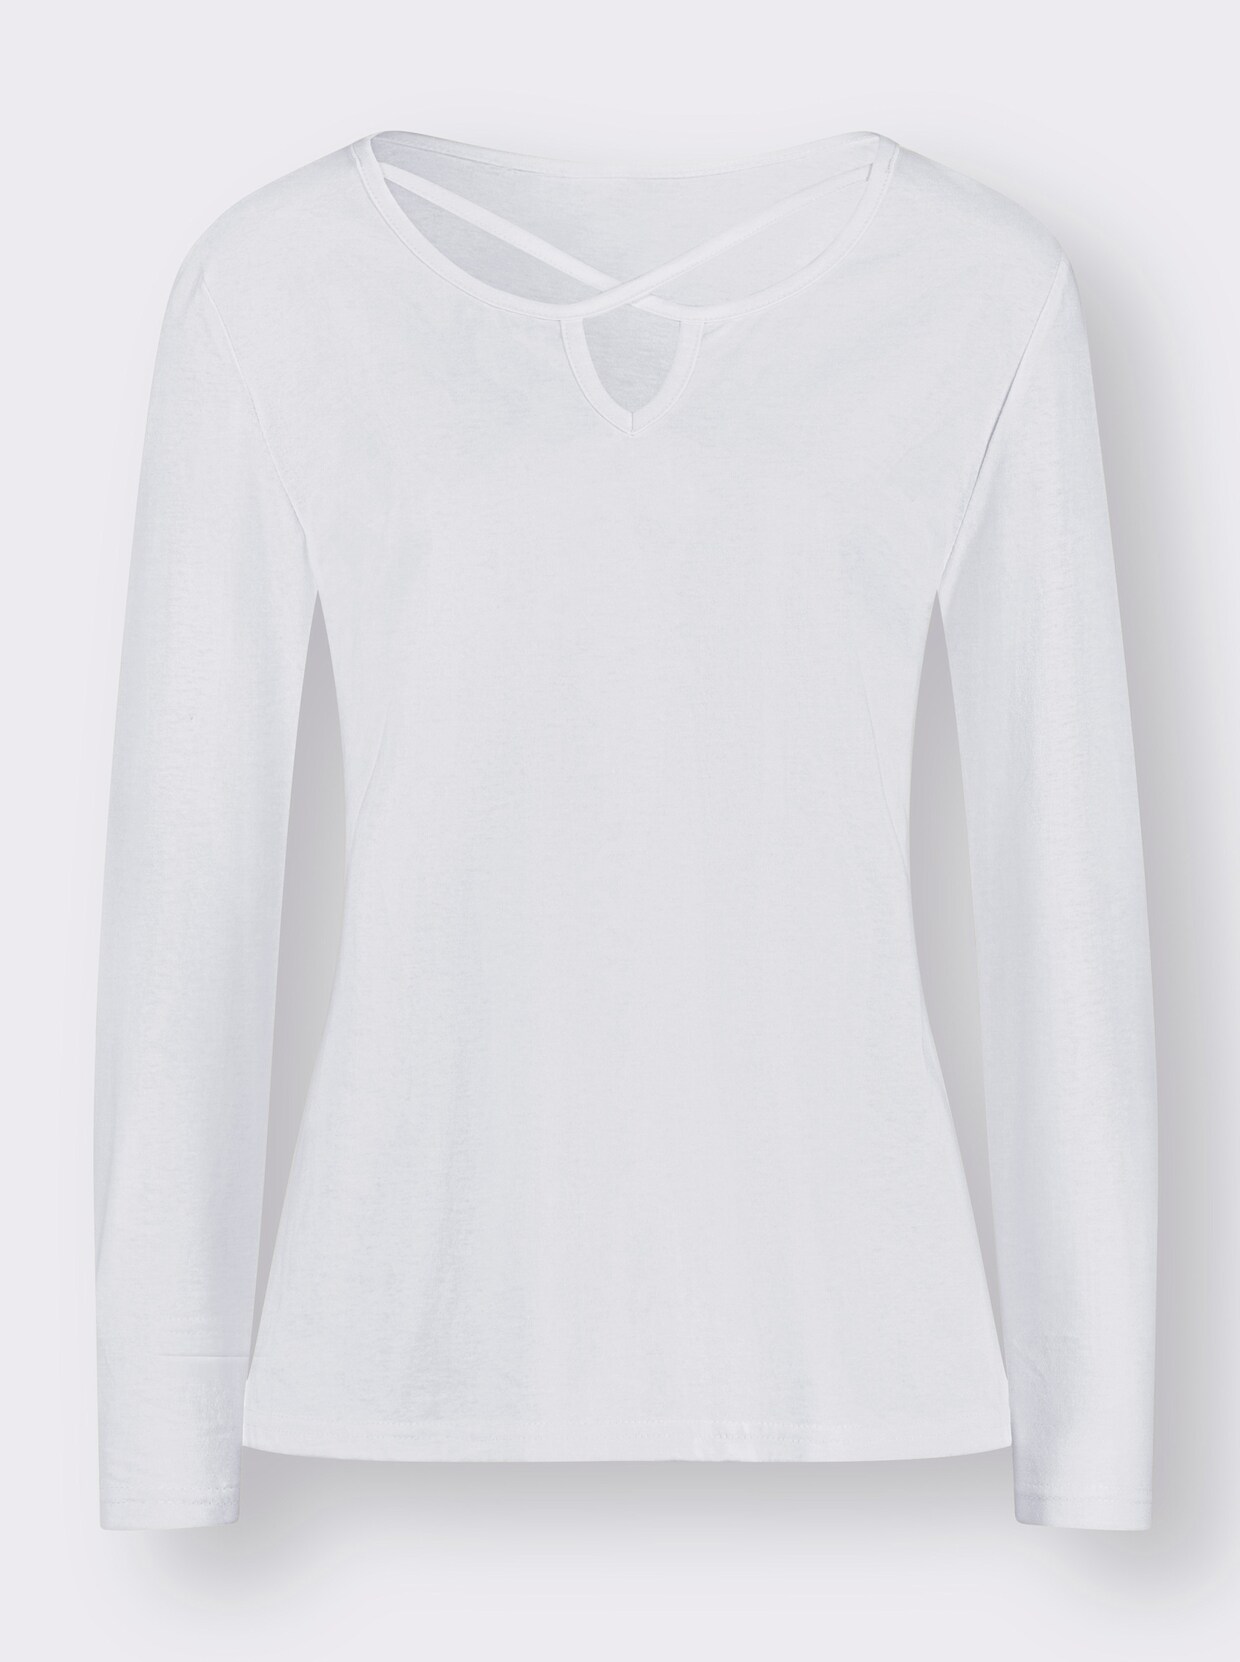 Langarm-Shirt - weiß